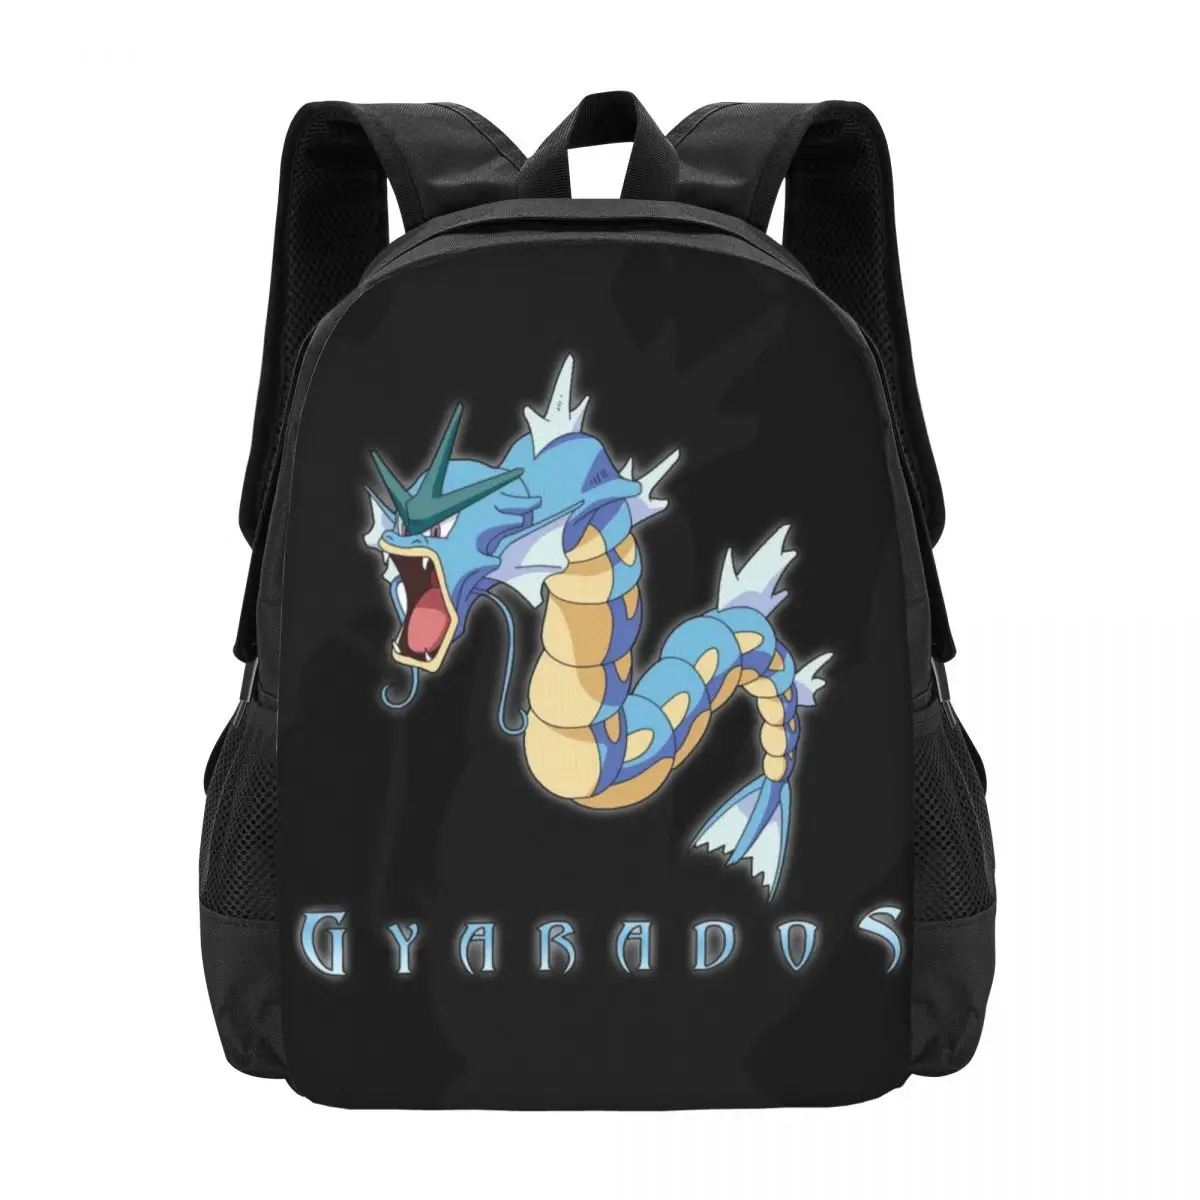 Gyarados Backpack for Girls Boys Travel RucksackBackpacks for Teenage school bag